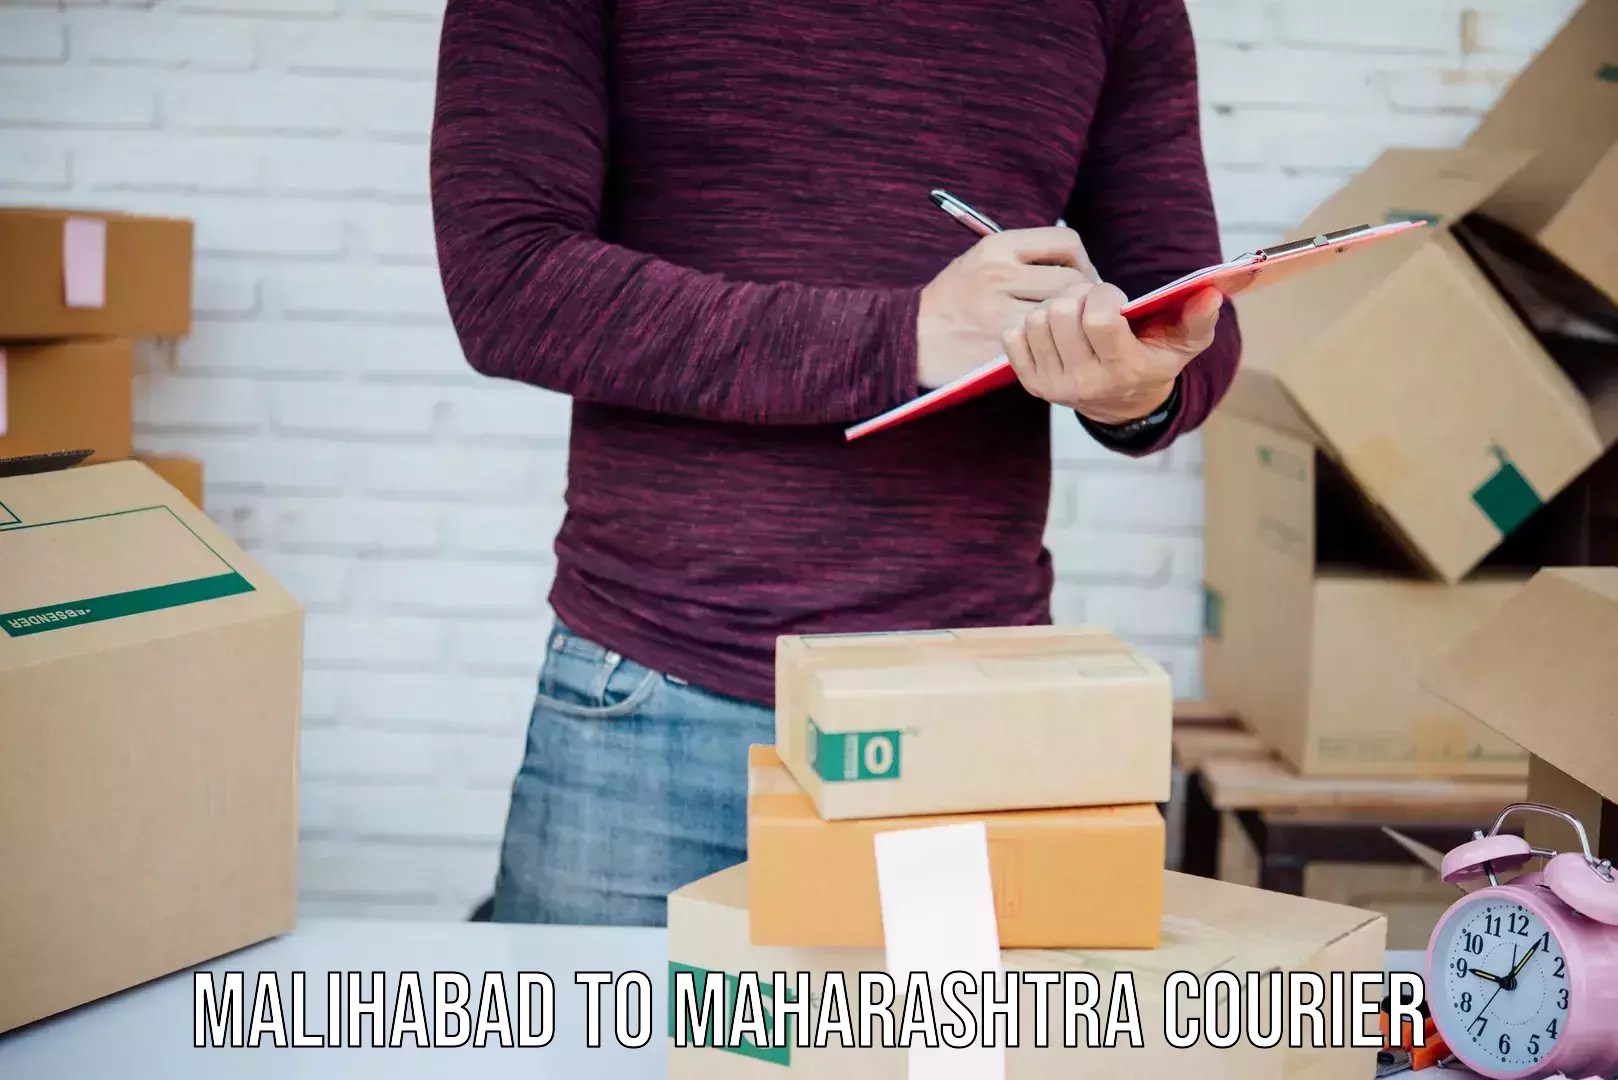 Customizable delivery plans Malihabad to Maharashtra